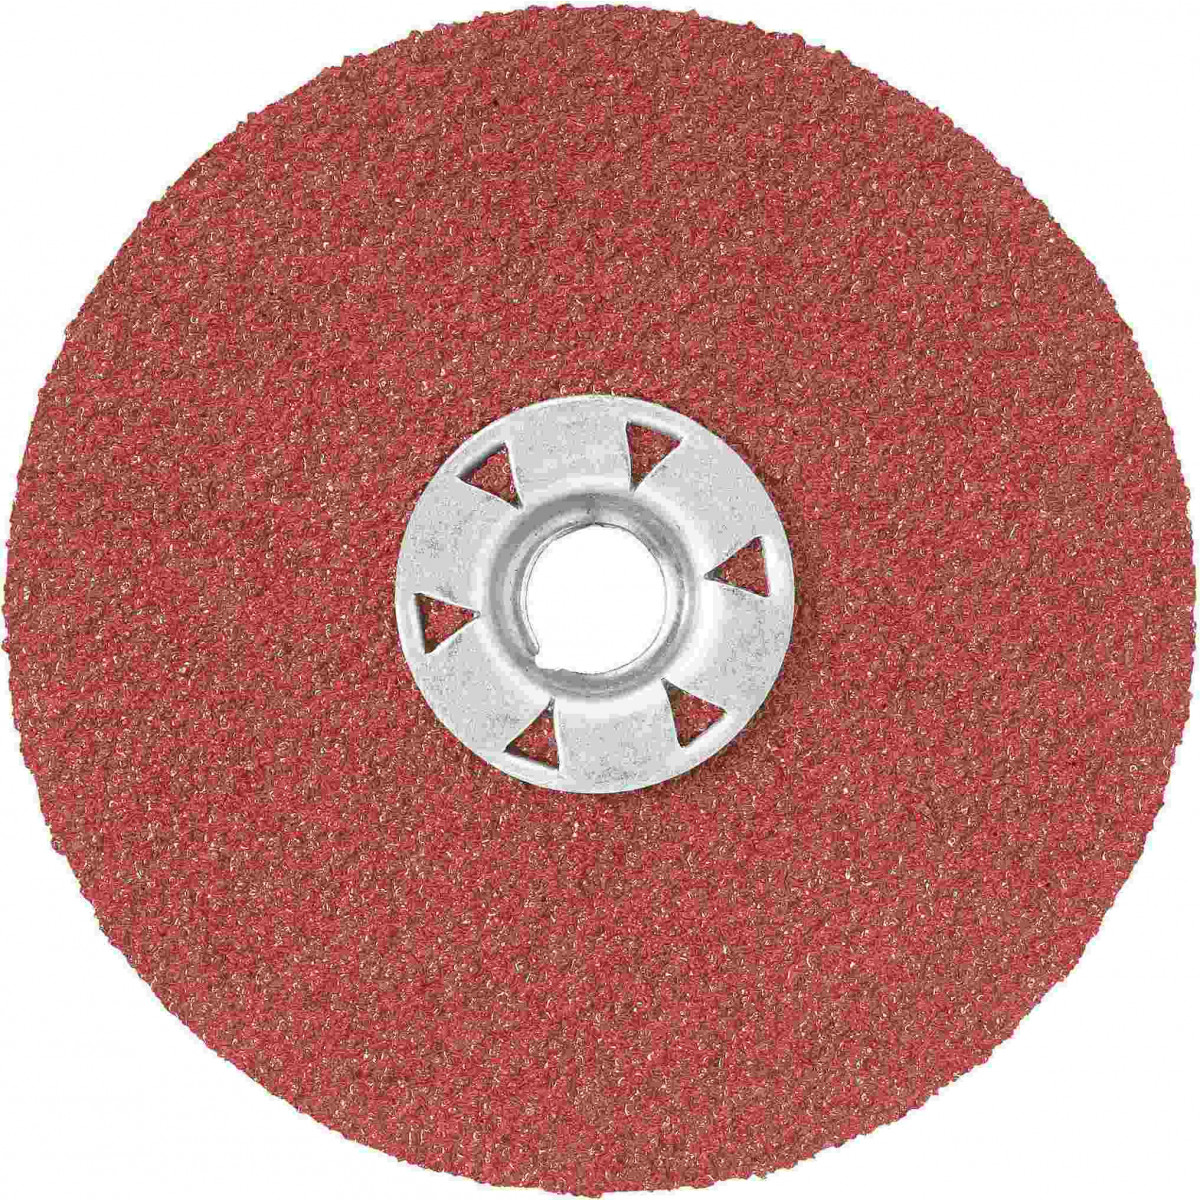 7 x 5/8 60G Ceramic Resin Fibre Disc